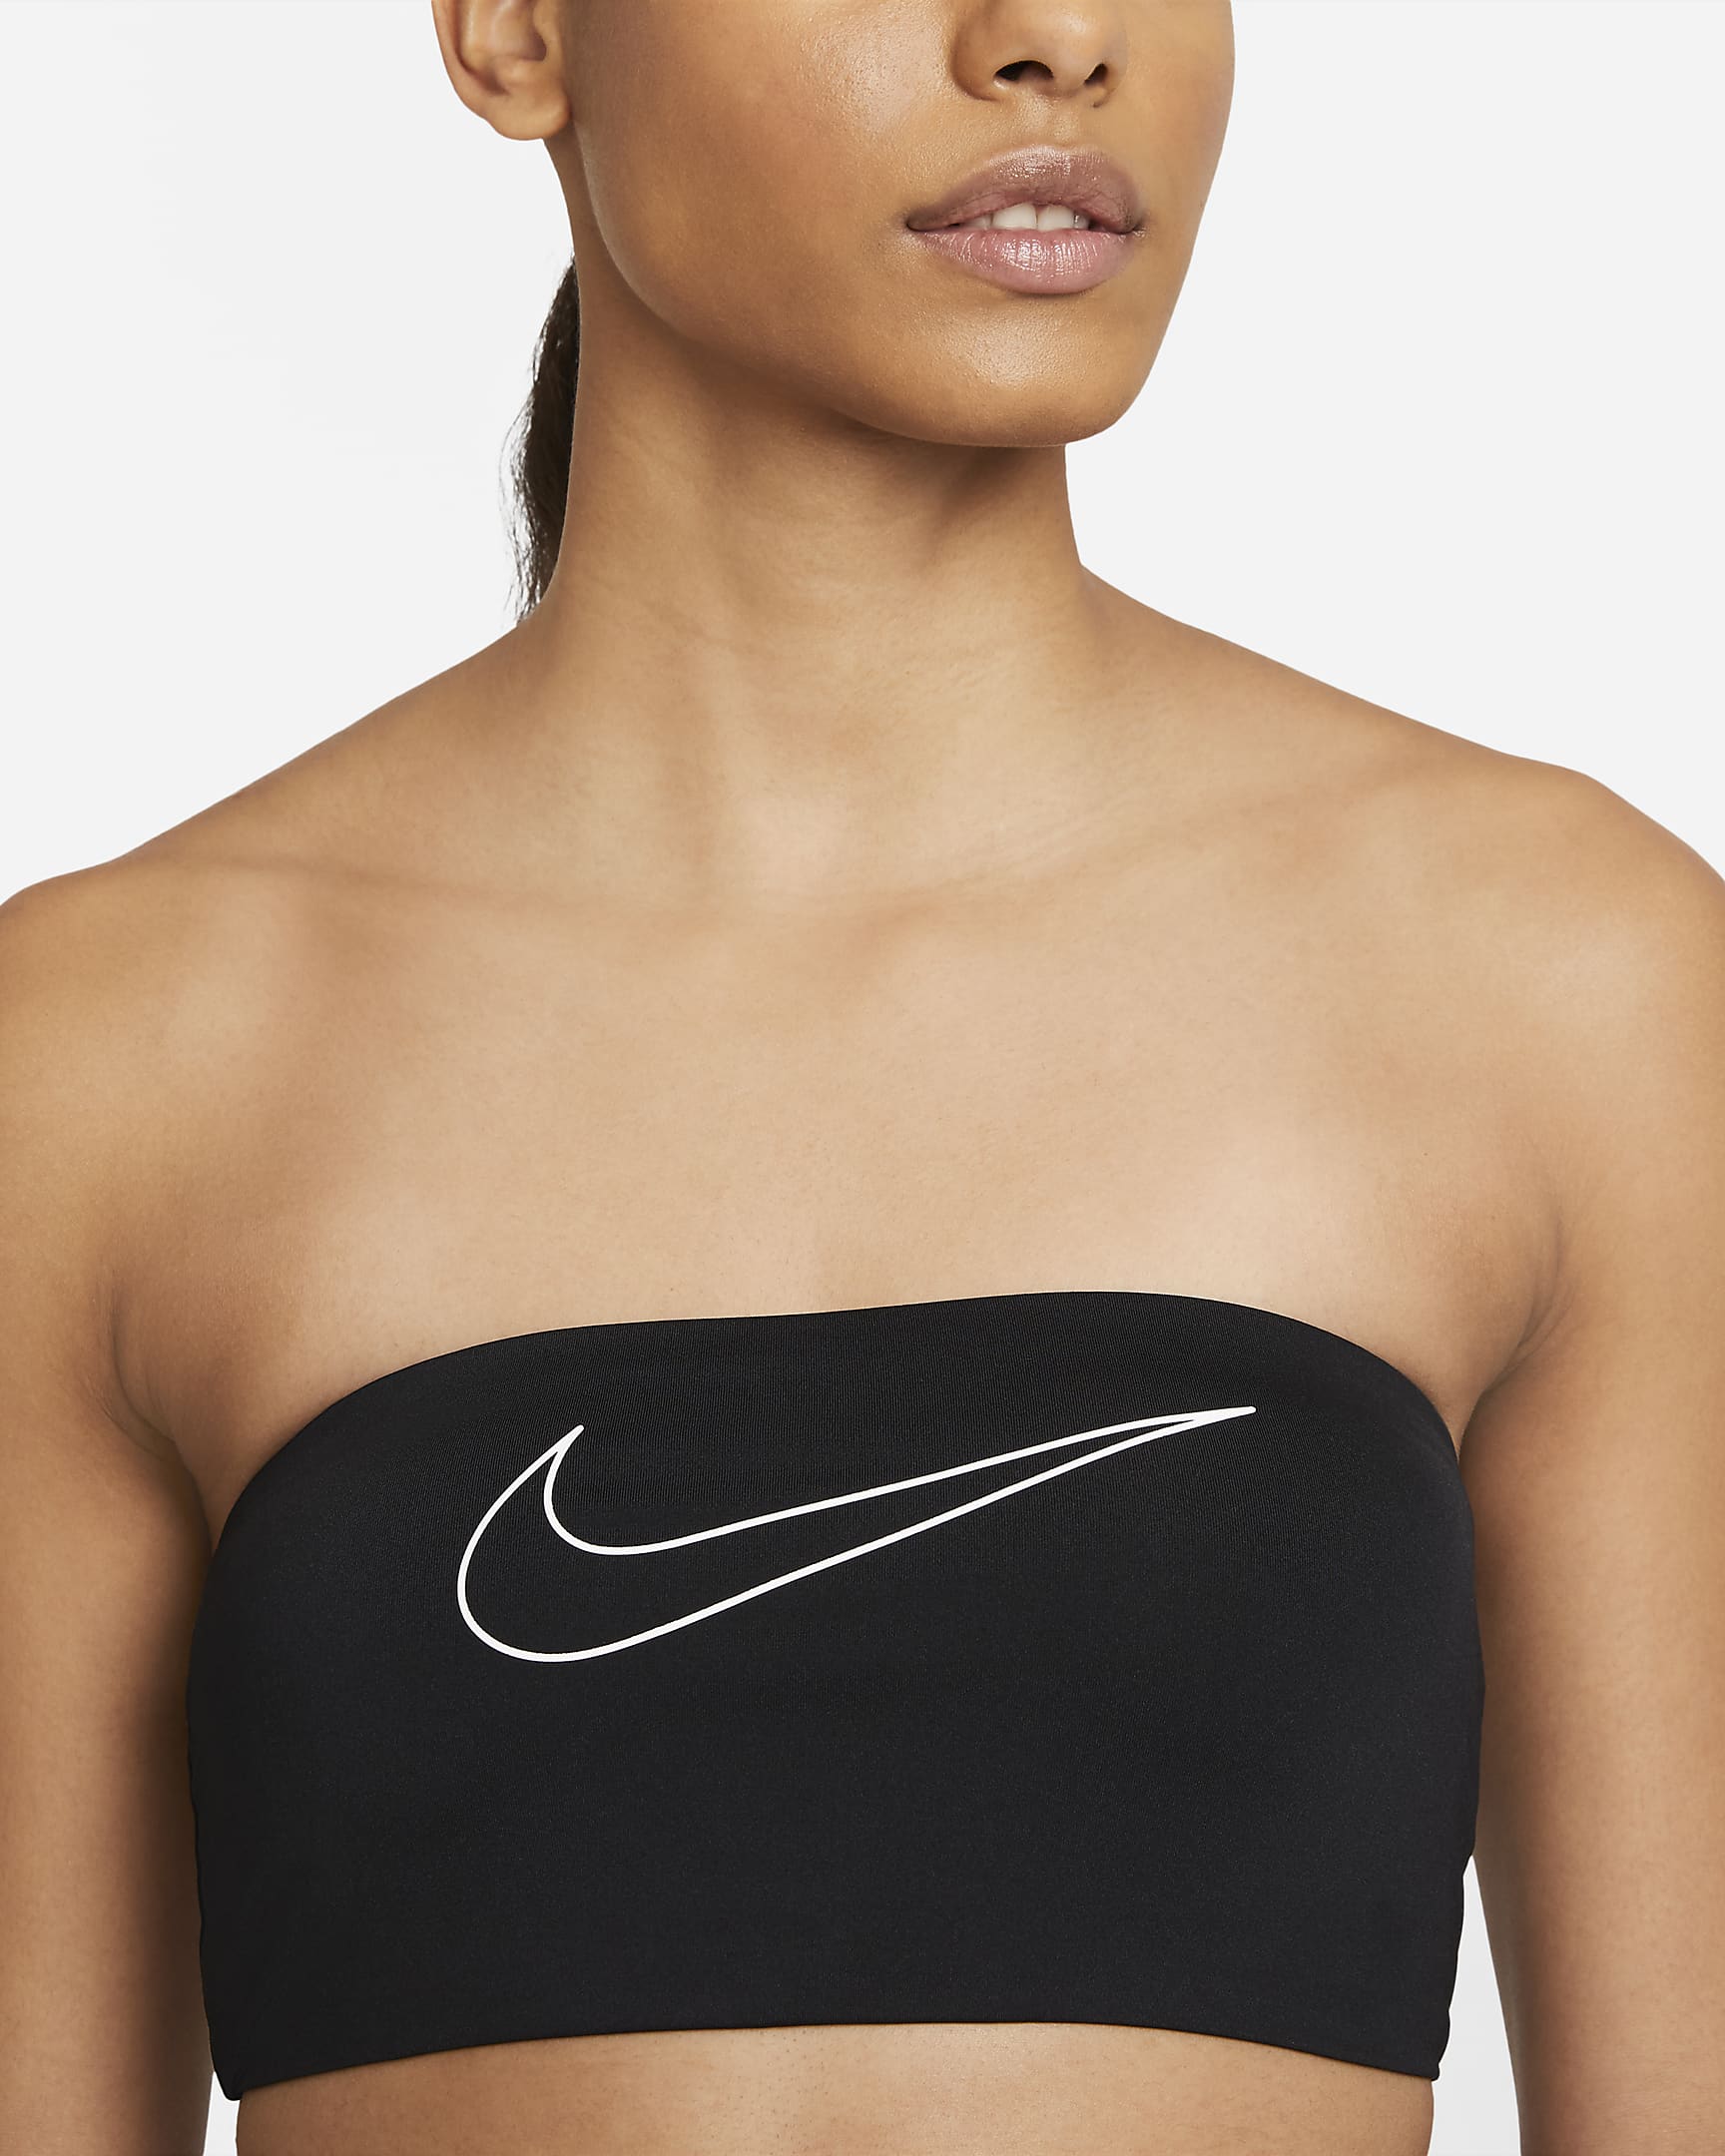 Nike Women's Bandeau Bikini Top - Black/White